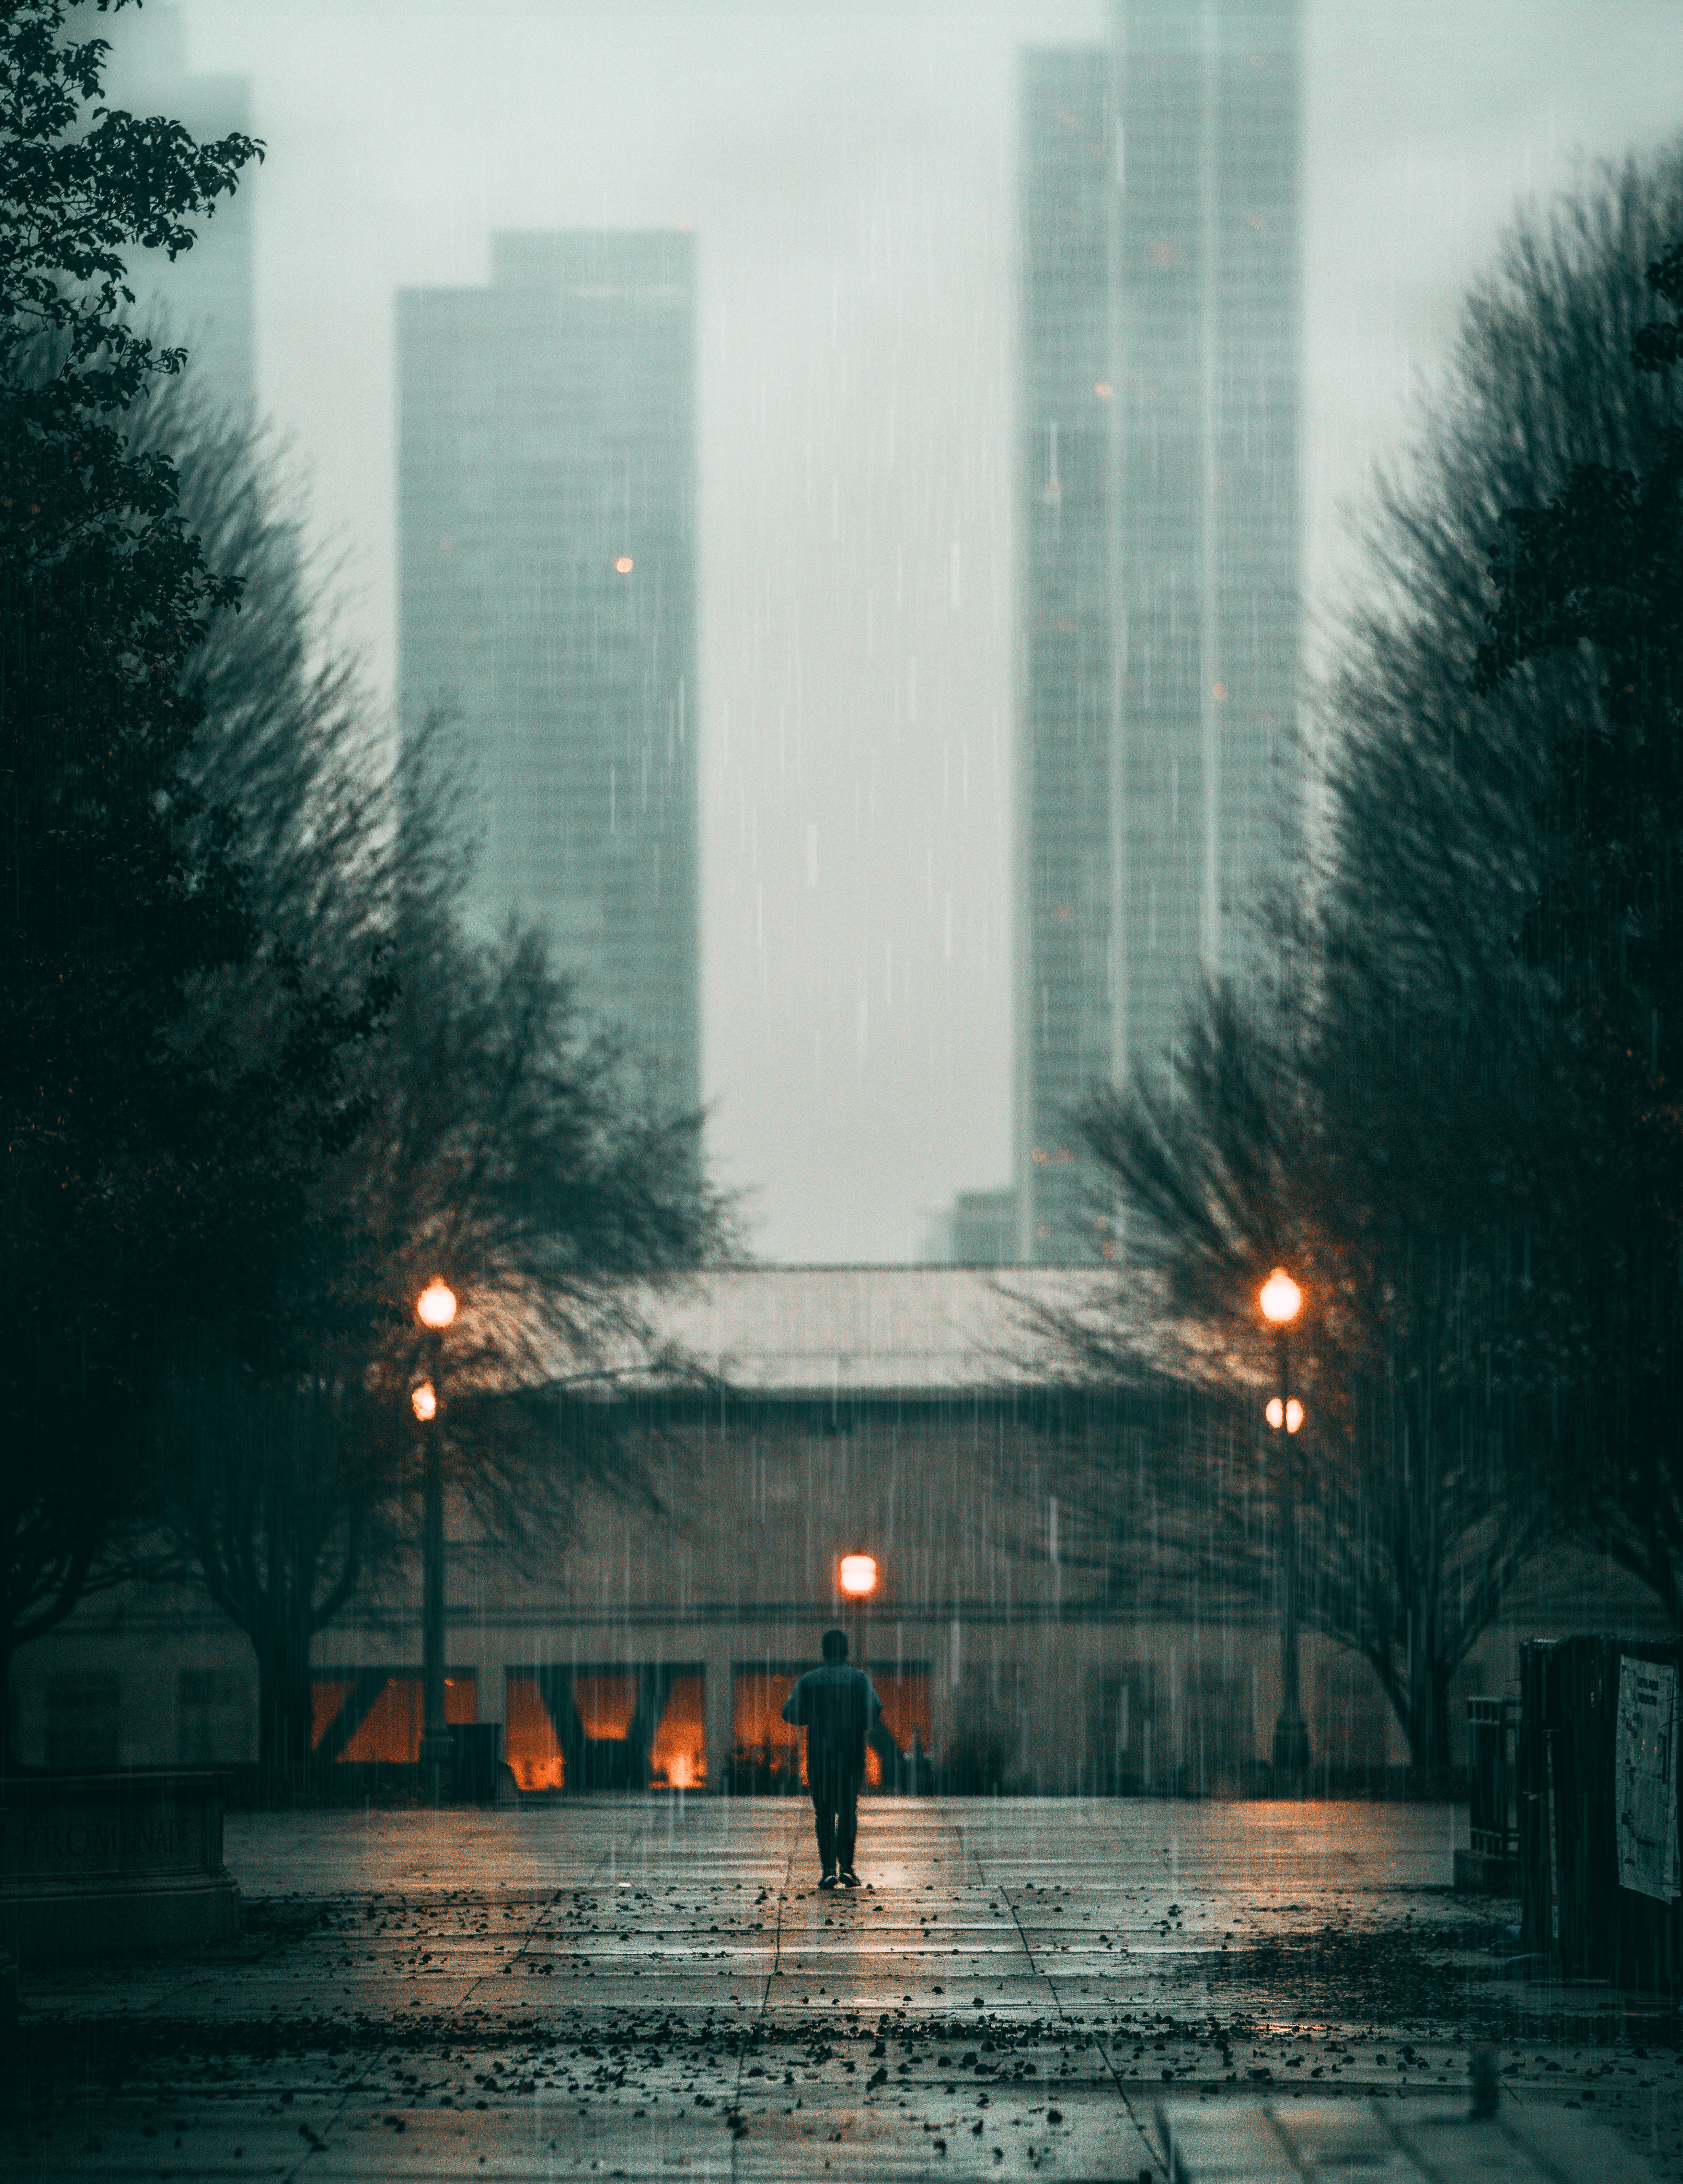 Download background rain, city, miscellanea, miscellaneous, sadness, stroll, human, person, loneliness, street, sorrow